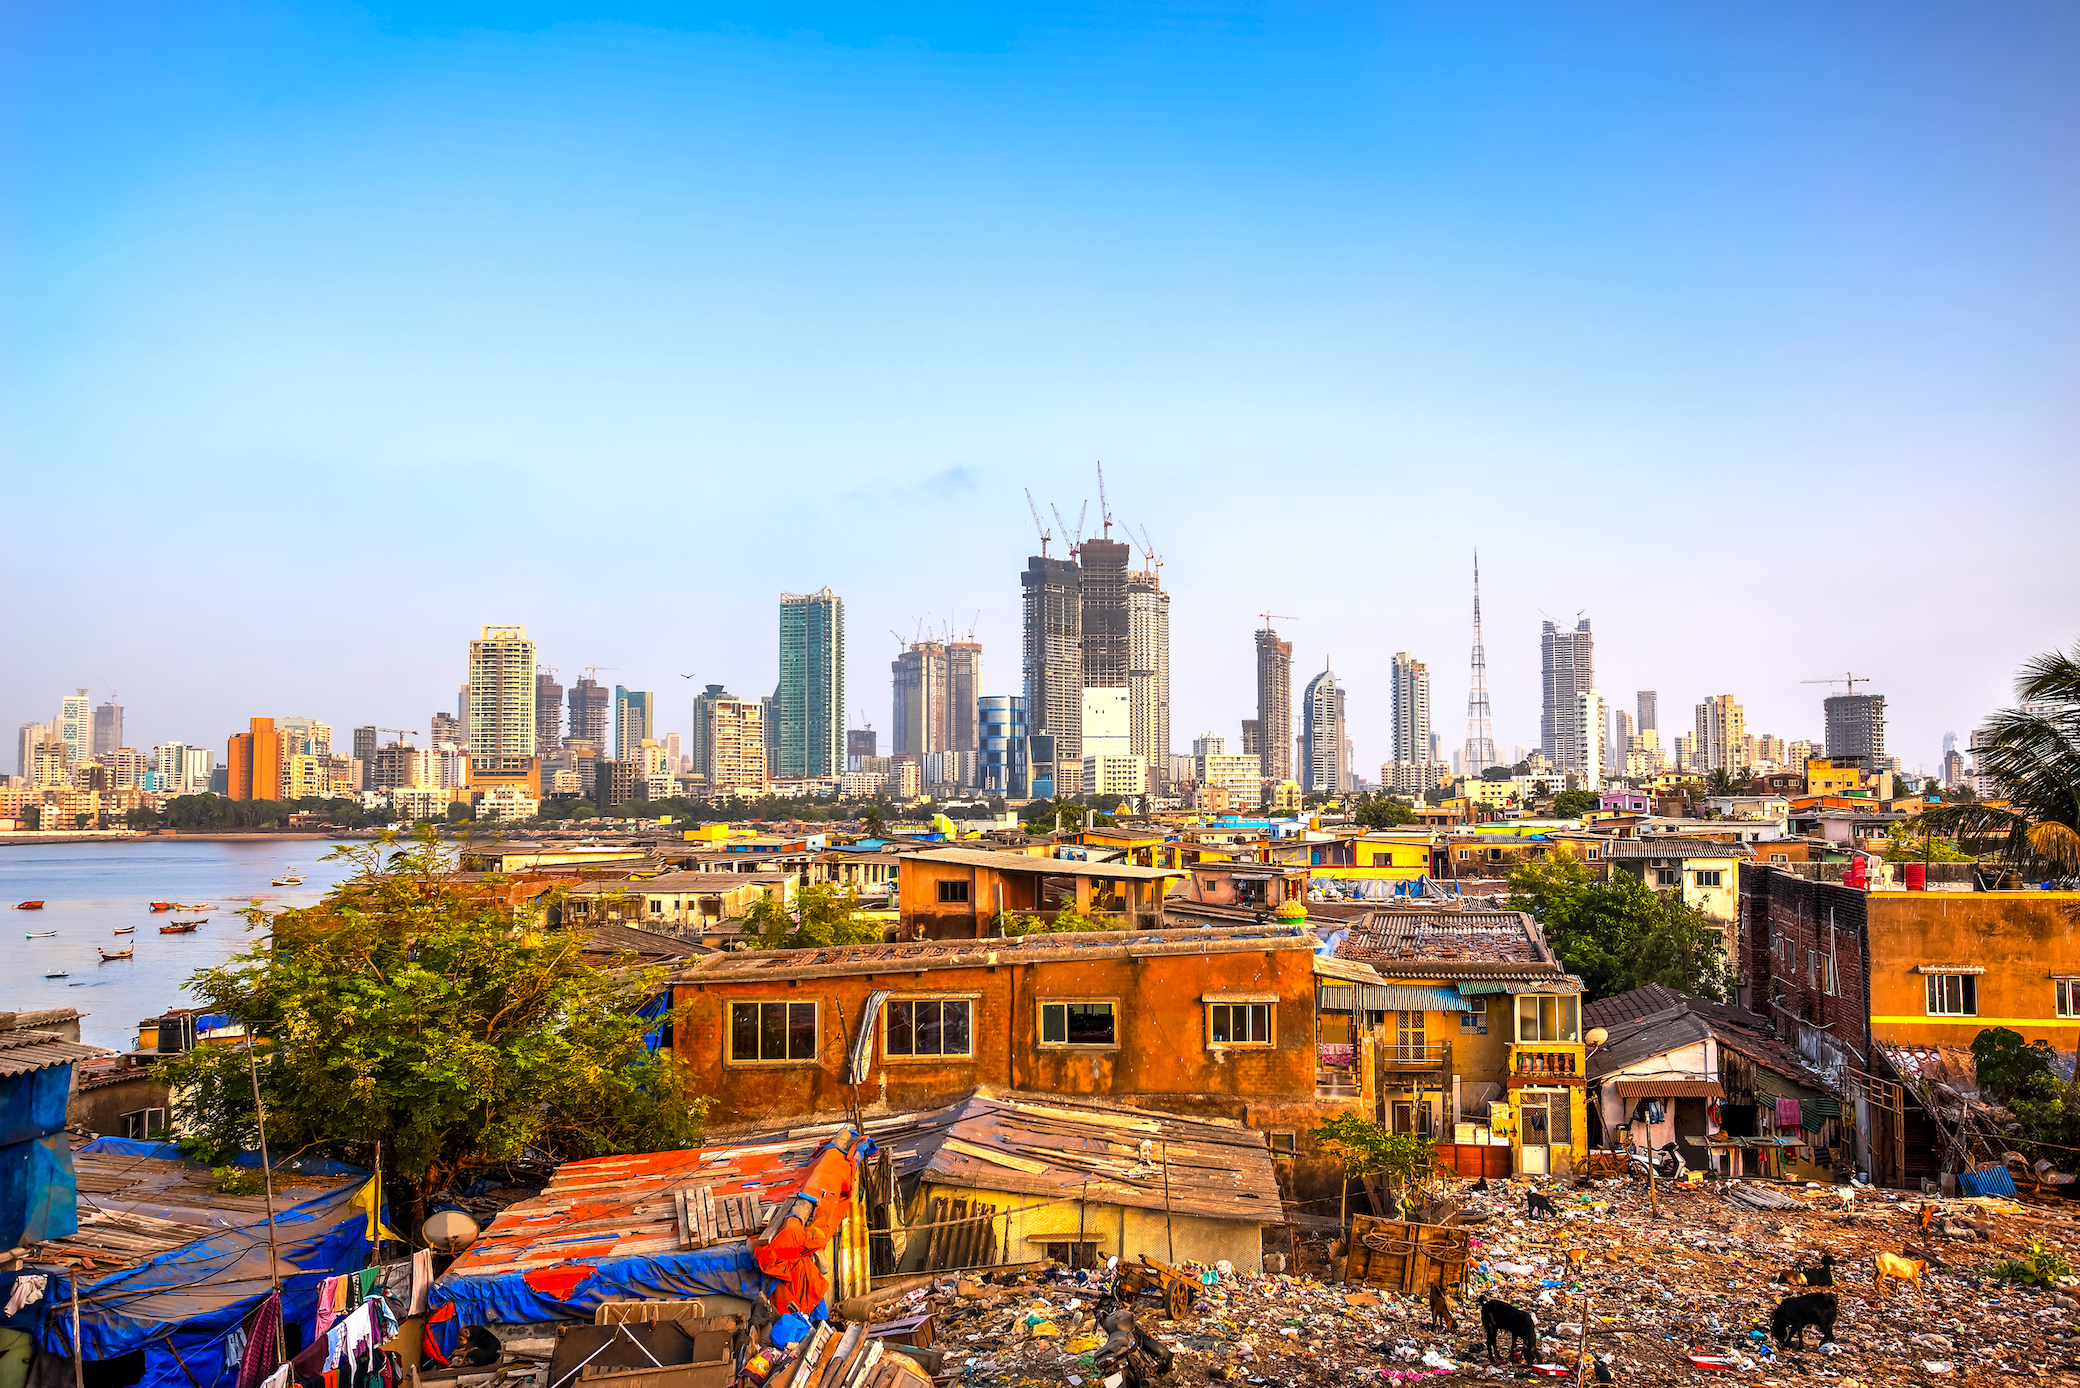 Mumbai cityscape